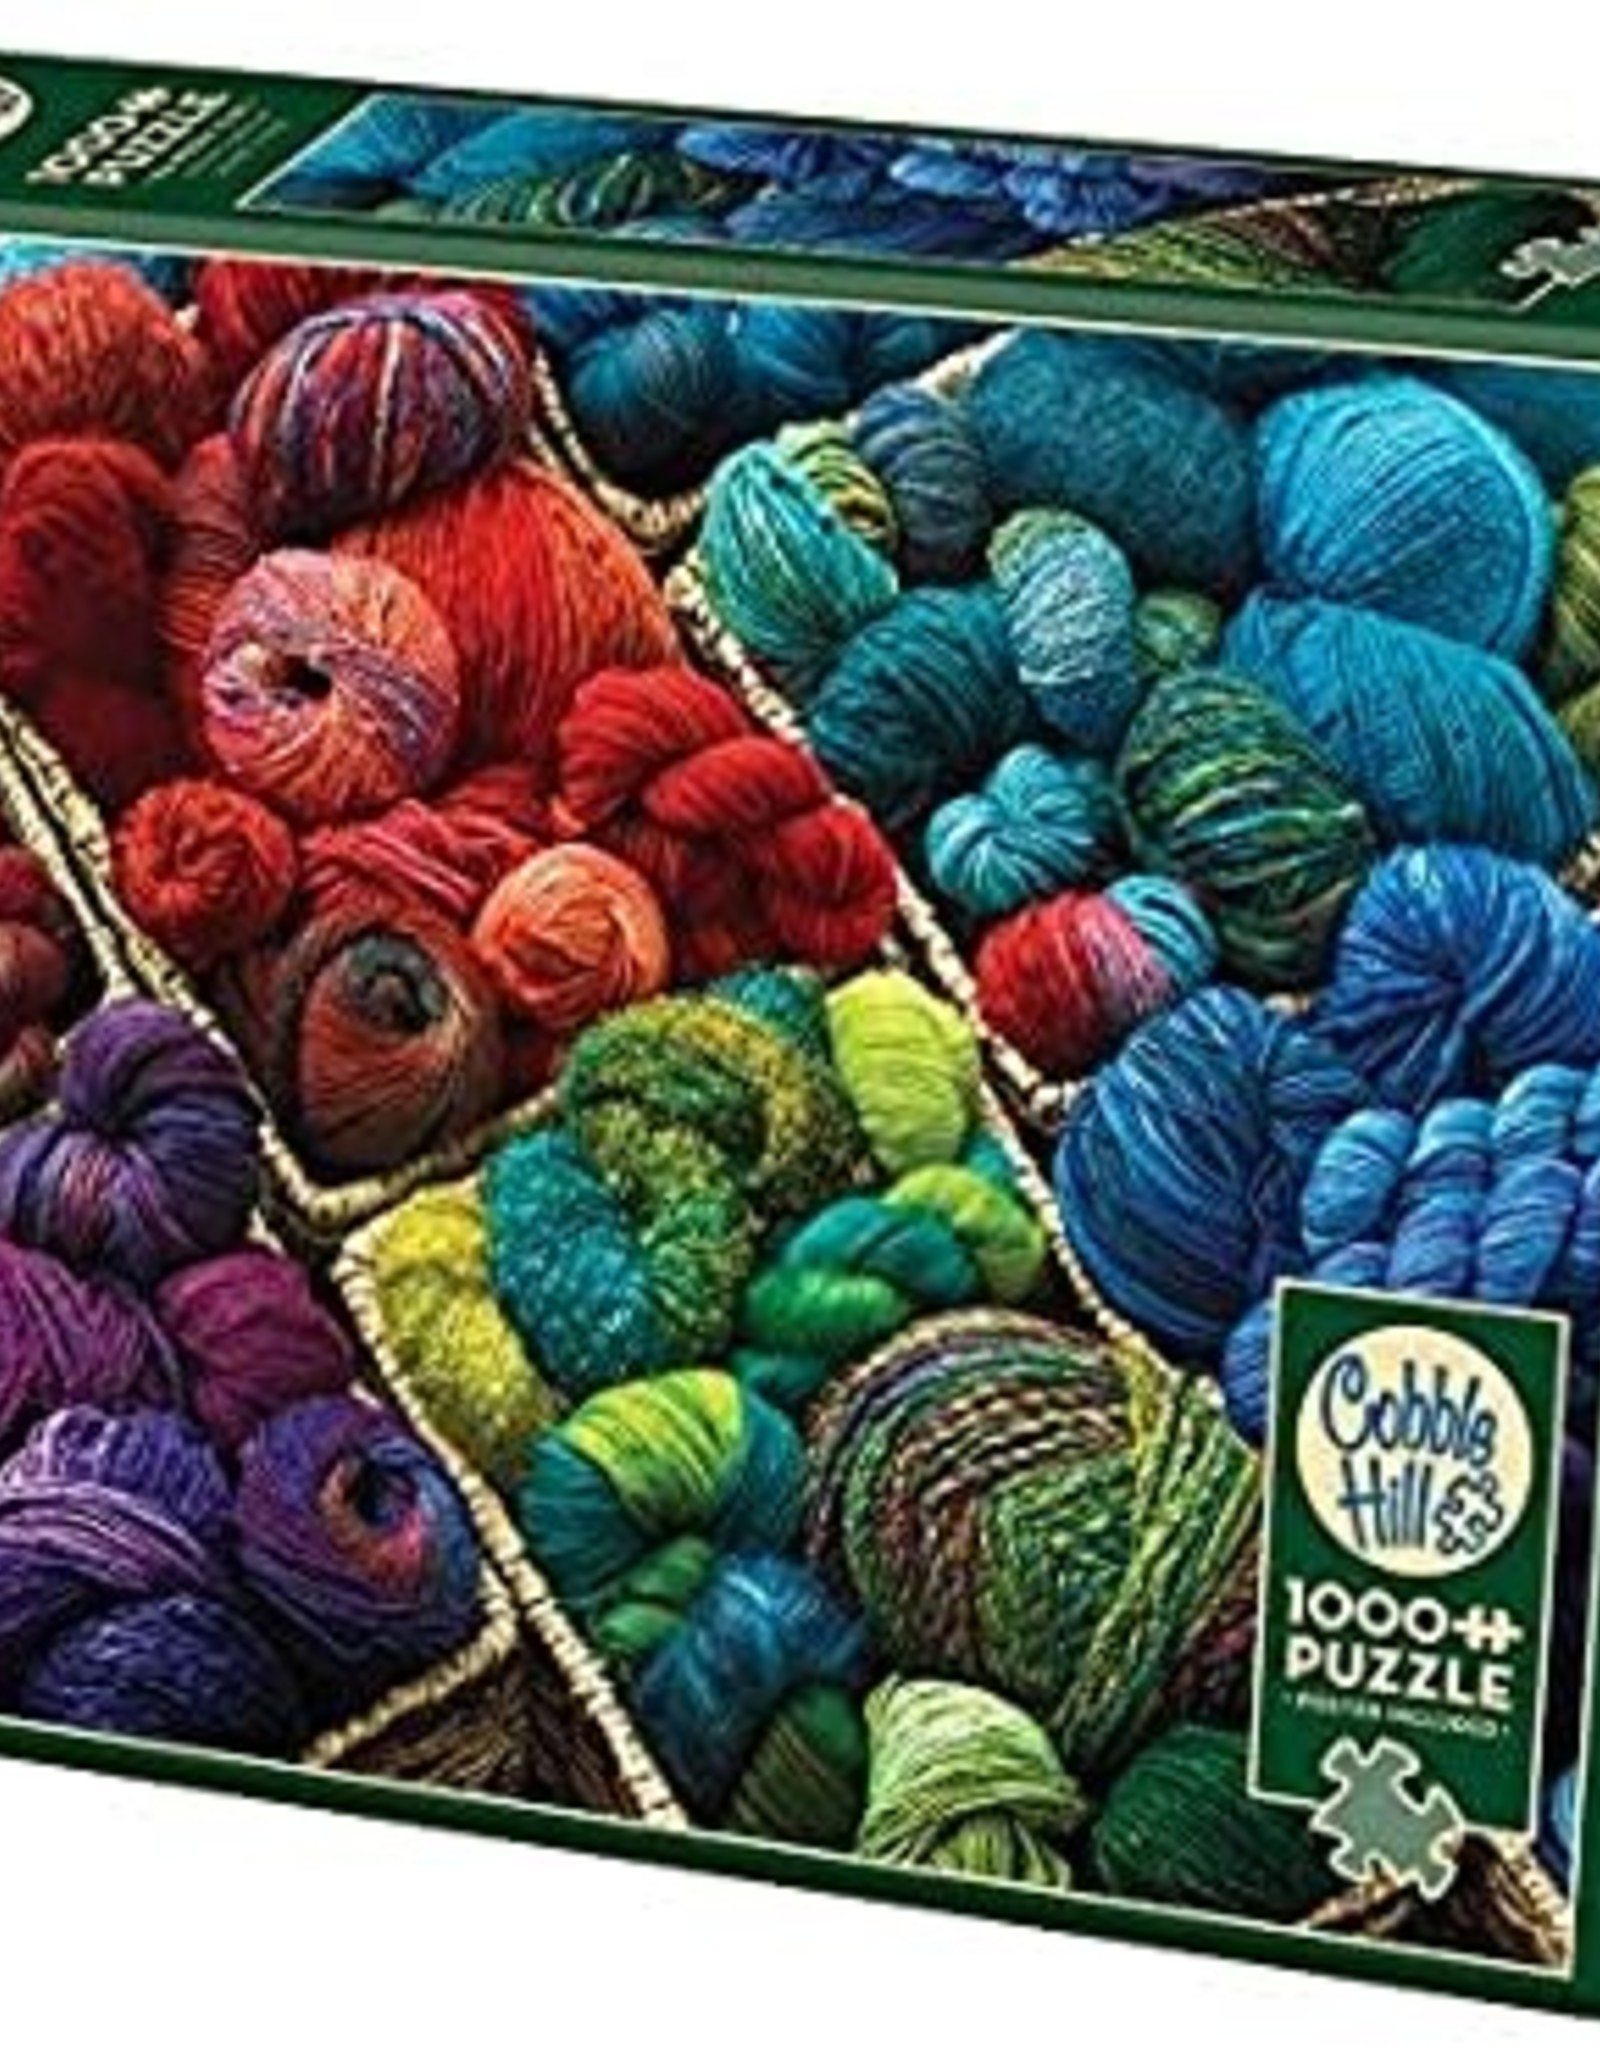 Cobble Hill Plenty of Yarn 1000 Piece Puzzle